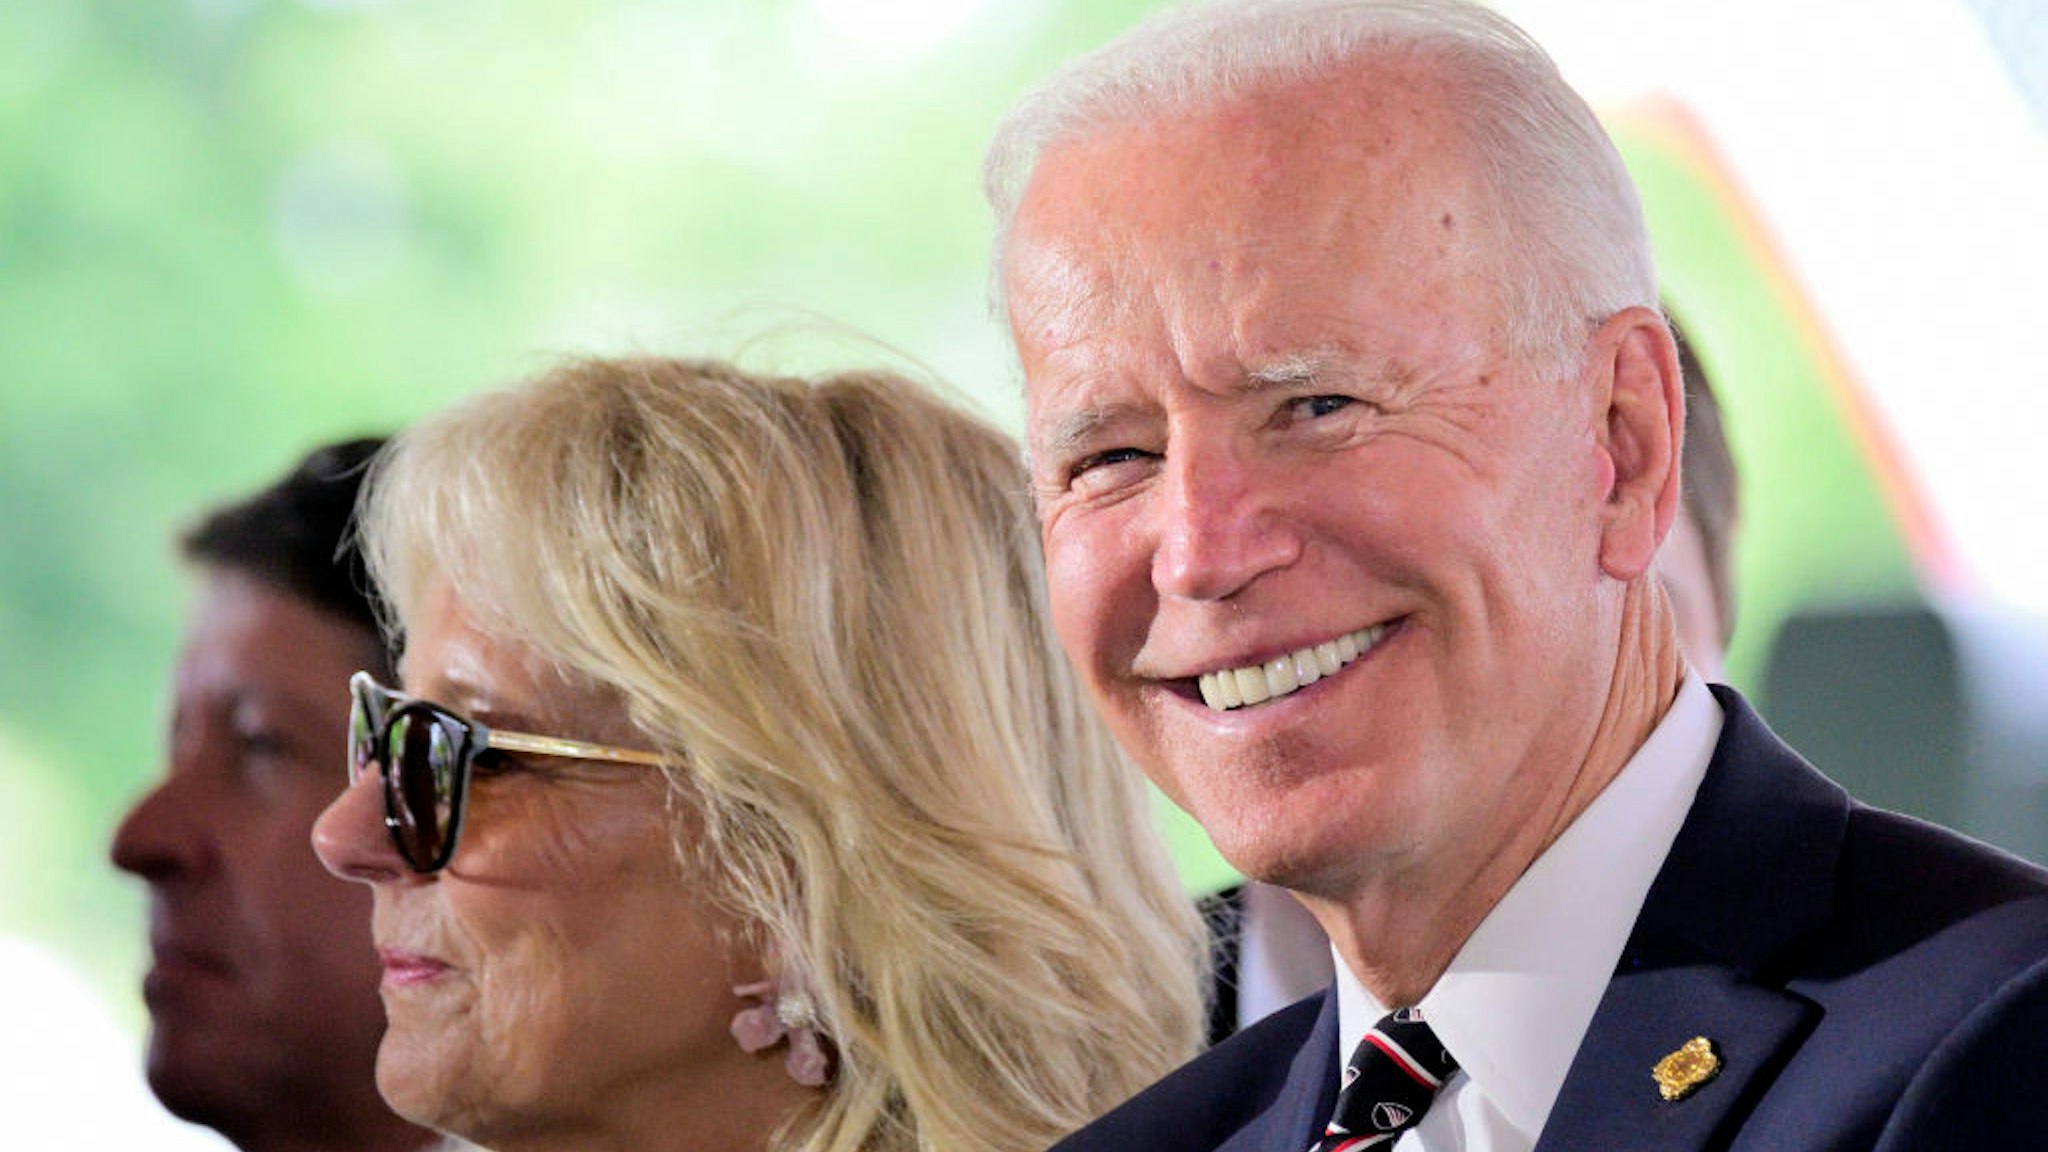 Presidential hopeful Former Vice President Joe Biden, joined by Dr. Jill Biden and granddaughter Natalie Biden on his side, attend the Delaware Memorial Day Ceremony, in New Castle, DE on May 30, 2019.